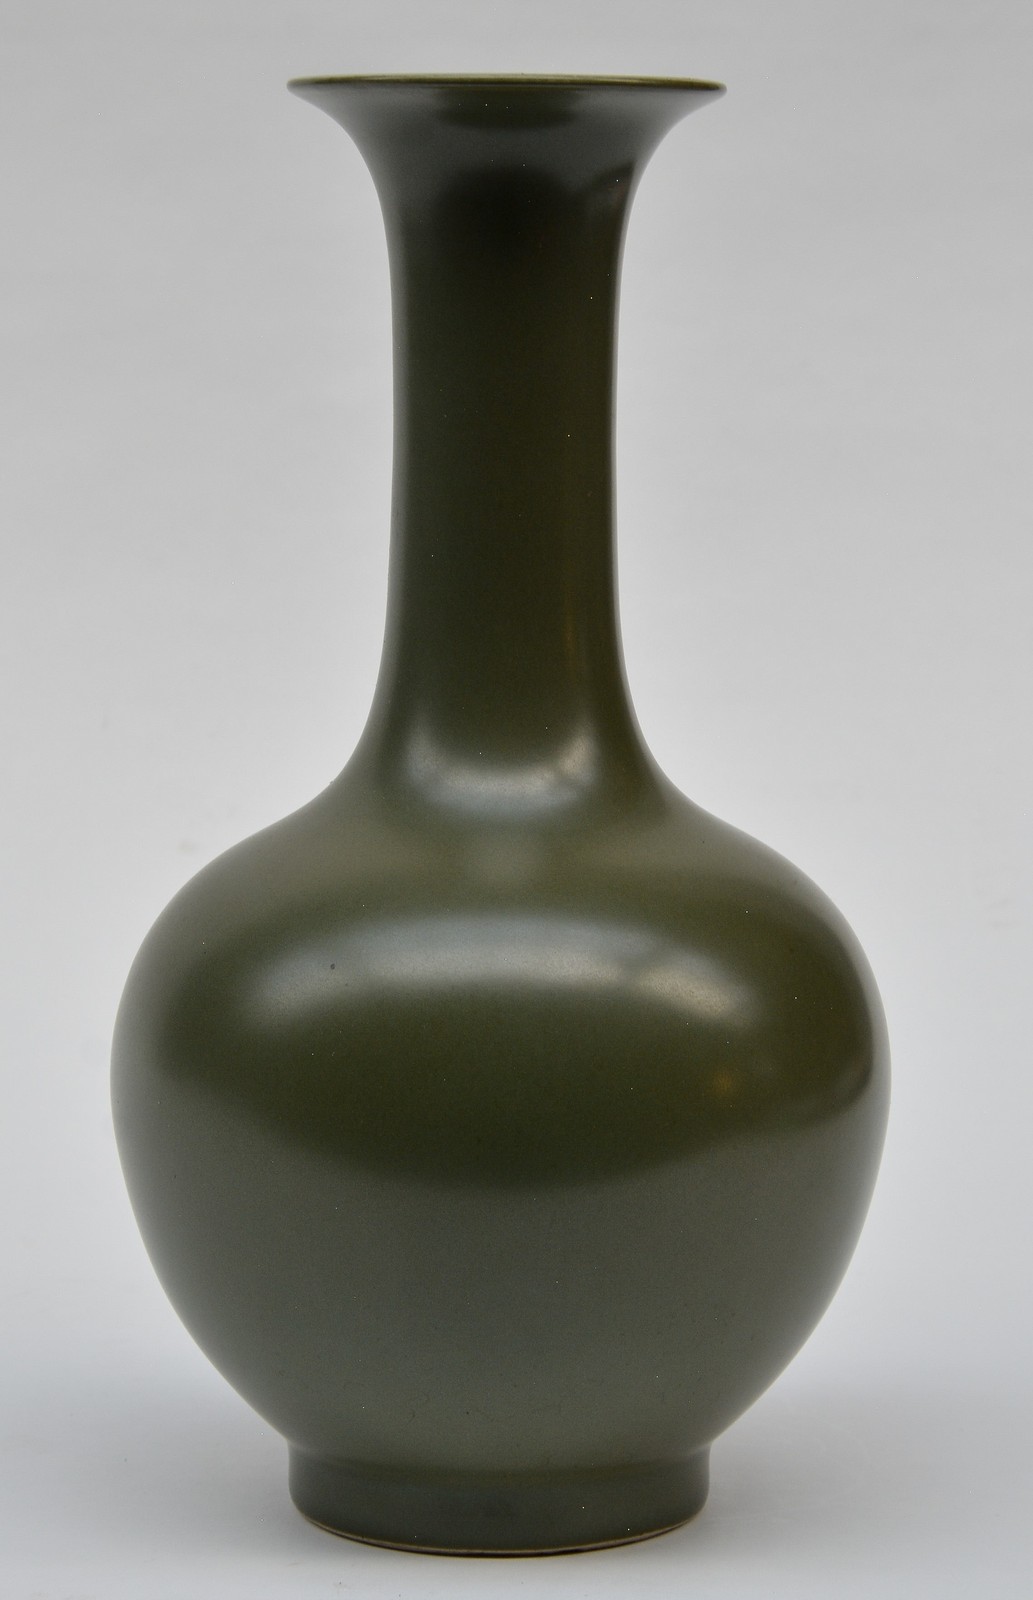 A Chinese monochrome olive green glazed bottle vase, with a blue underglaze mark, H 25 cm - Image 2 of 5